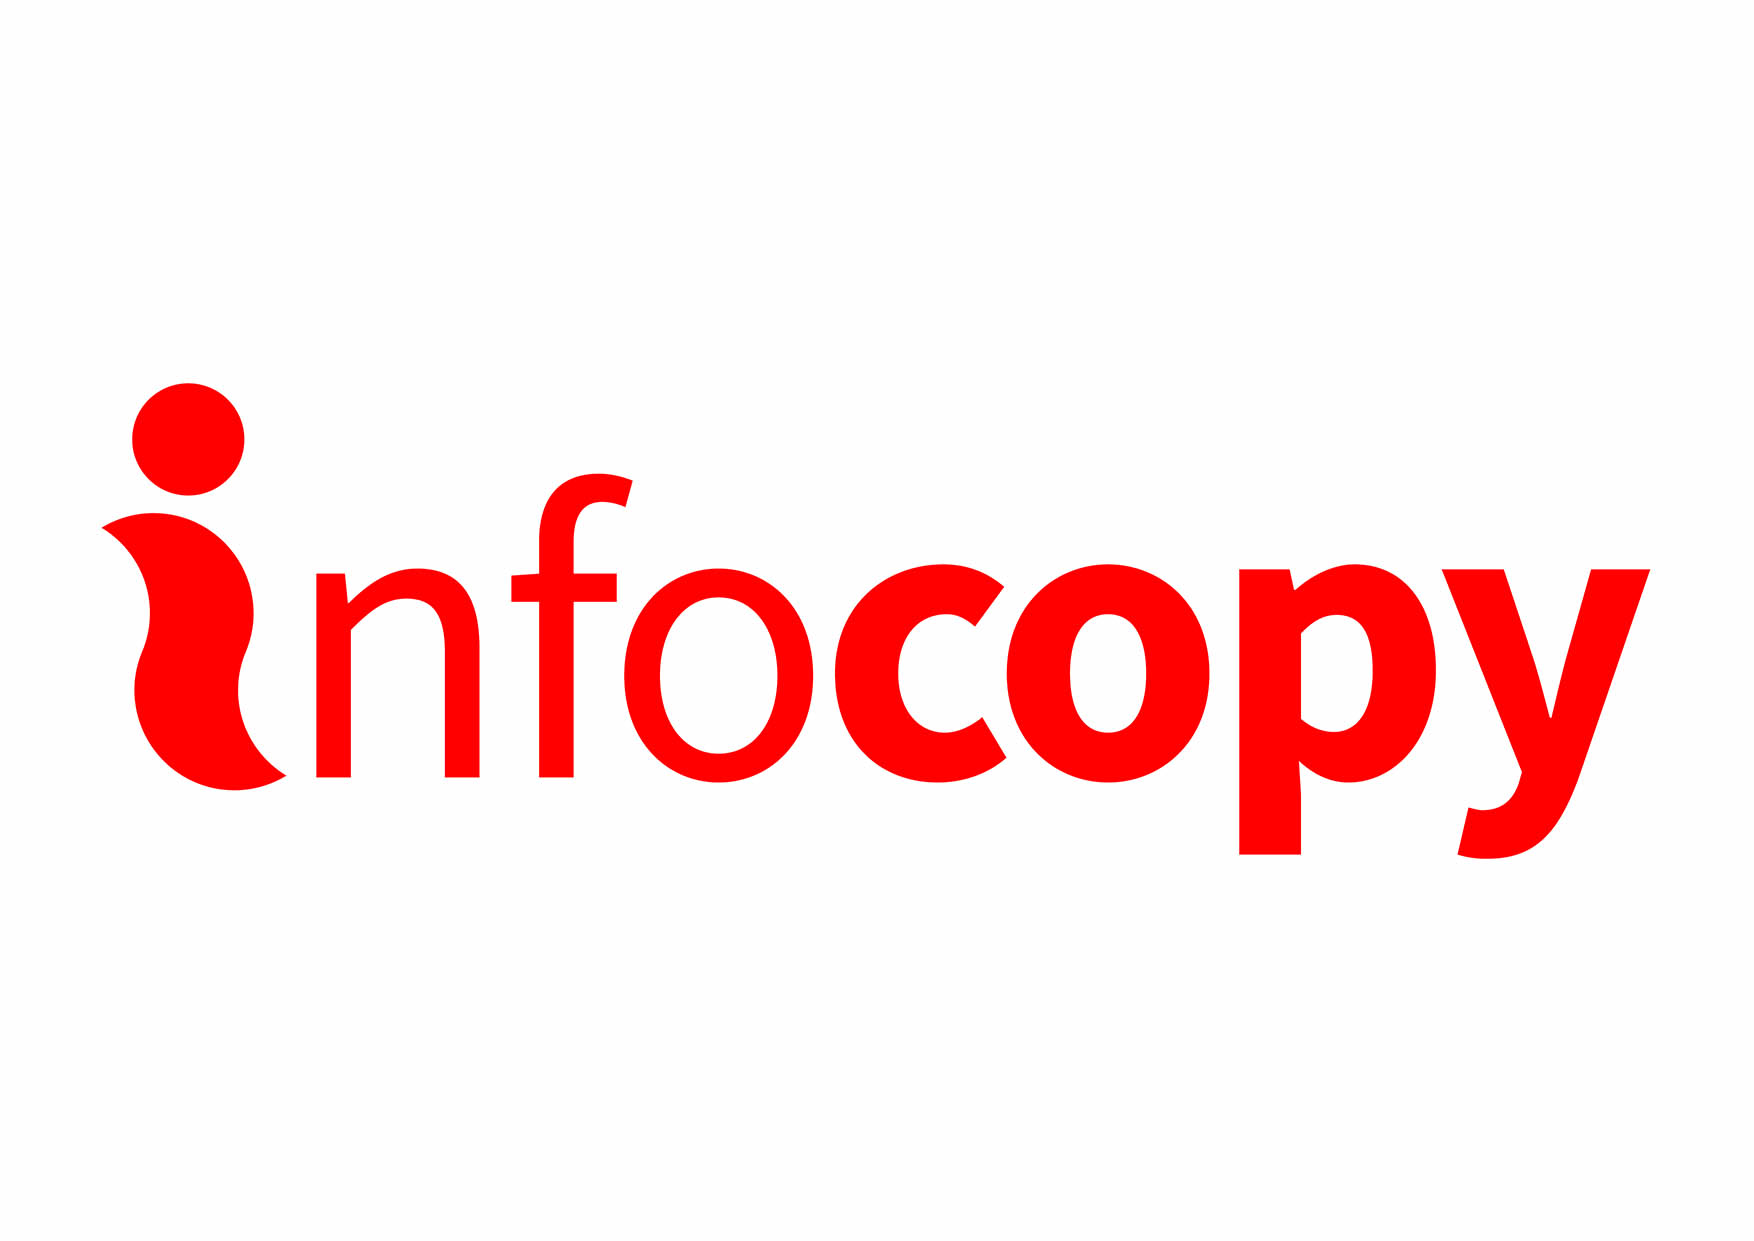 Infocopy transforma su web e imagen corporativa